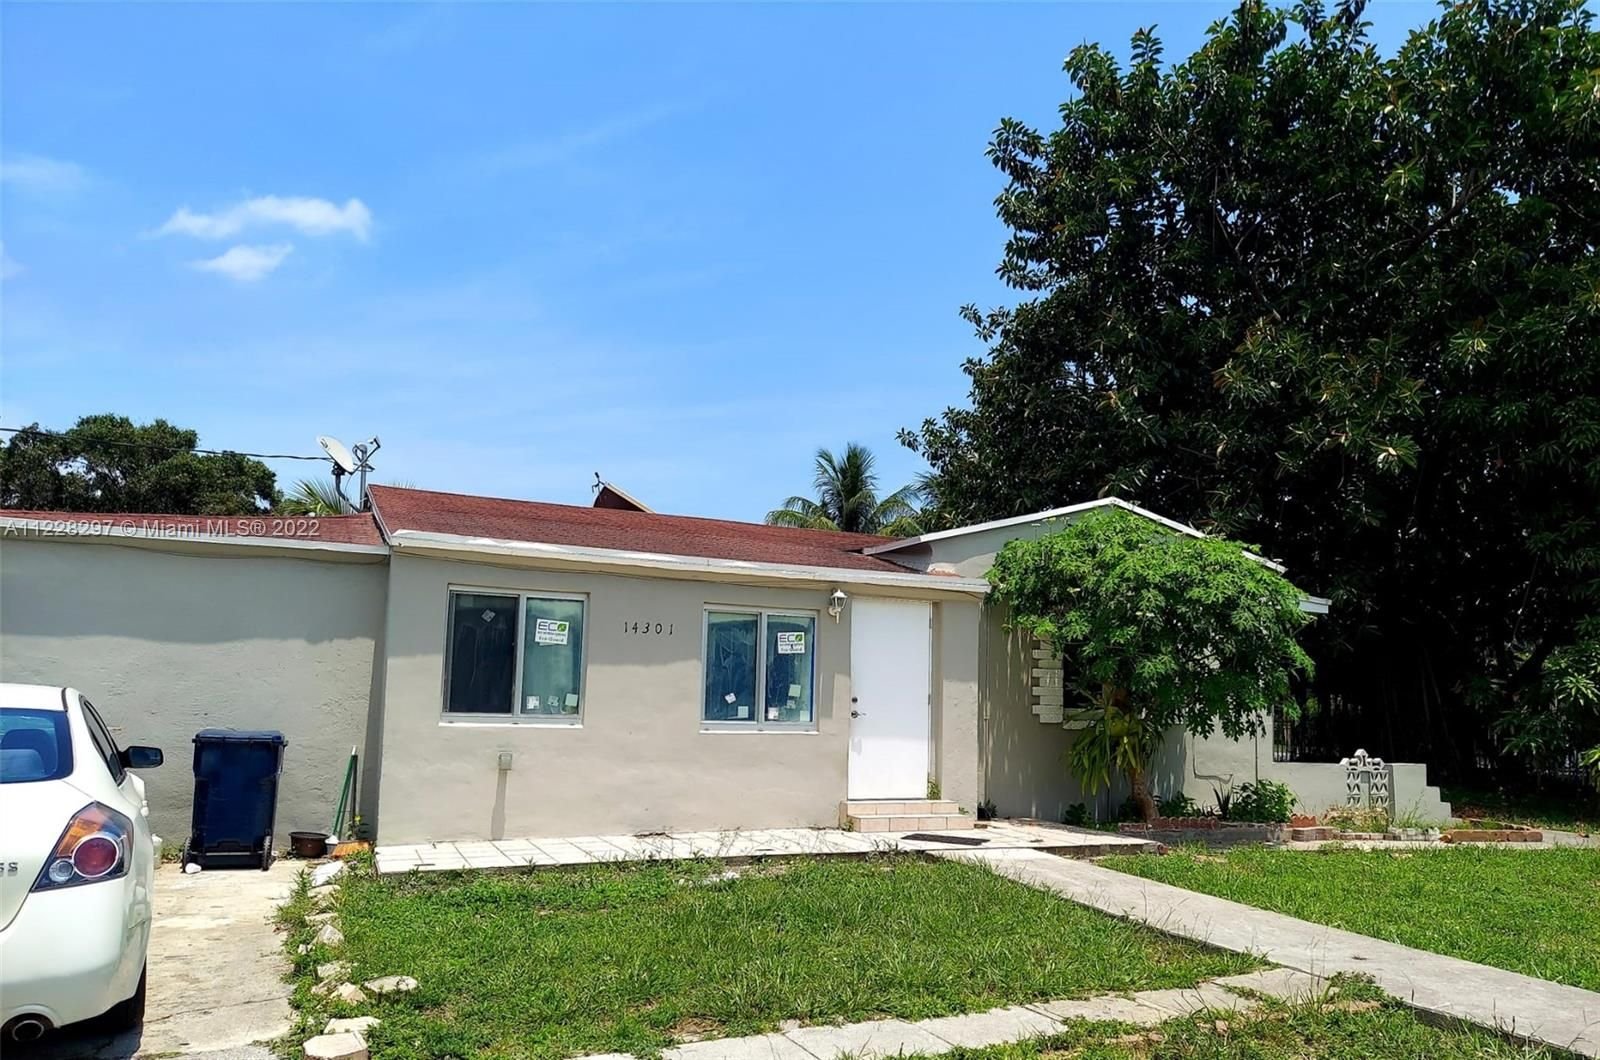 Real estate property located at 14301 6th Ave, Miami-Dade County, Miami, FL